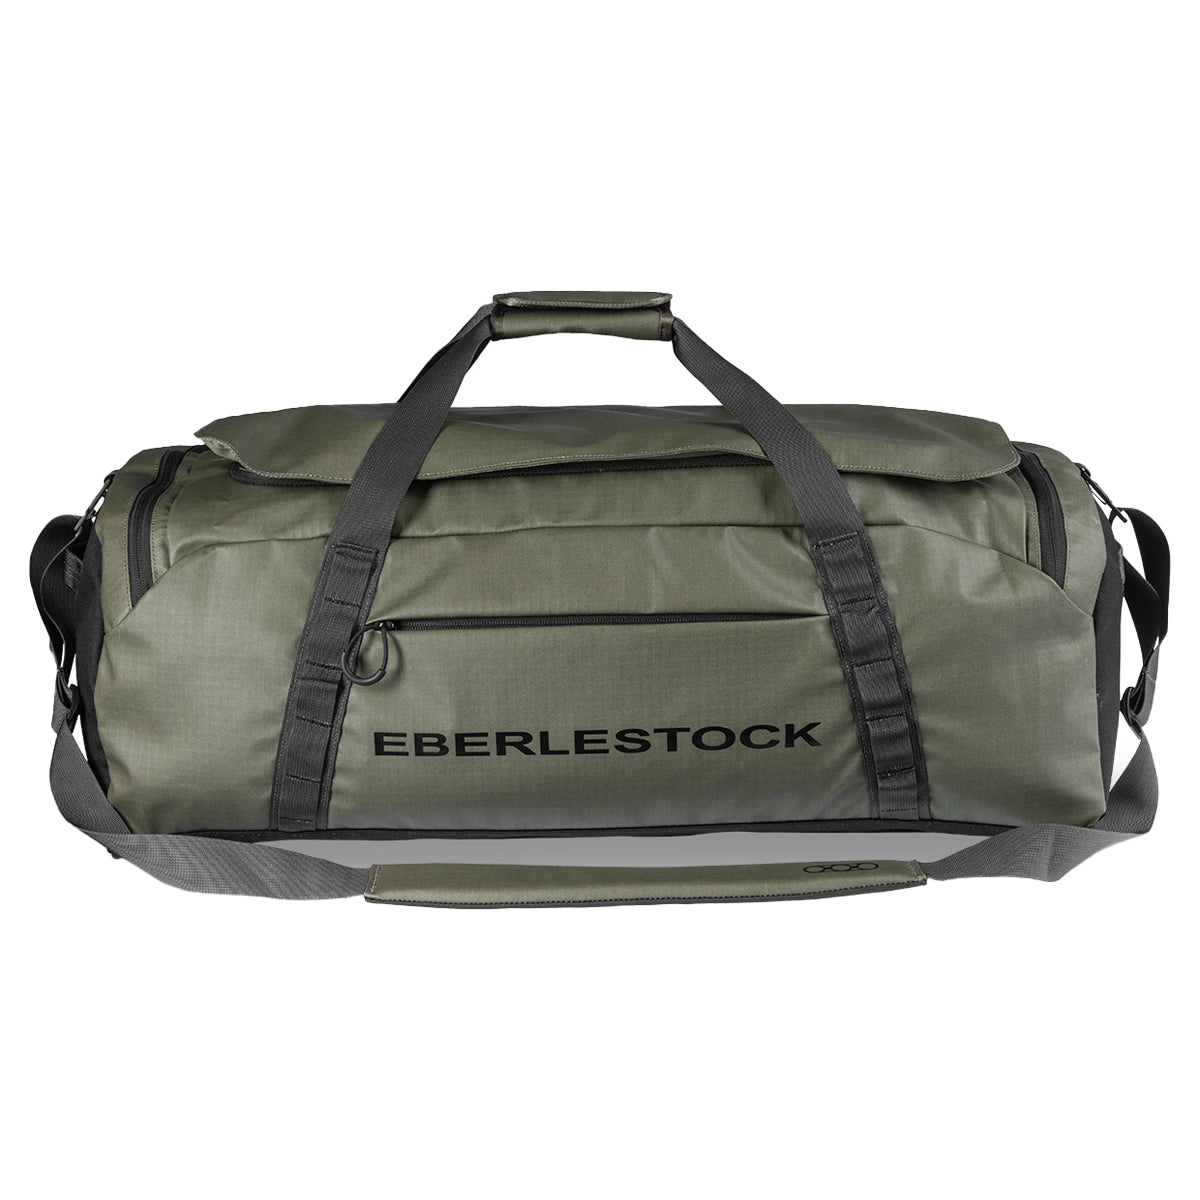 Eberlestock Hyllus Duffel in  by GOHUNT | Eberlestock - GOHUNT Shop